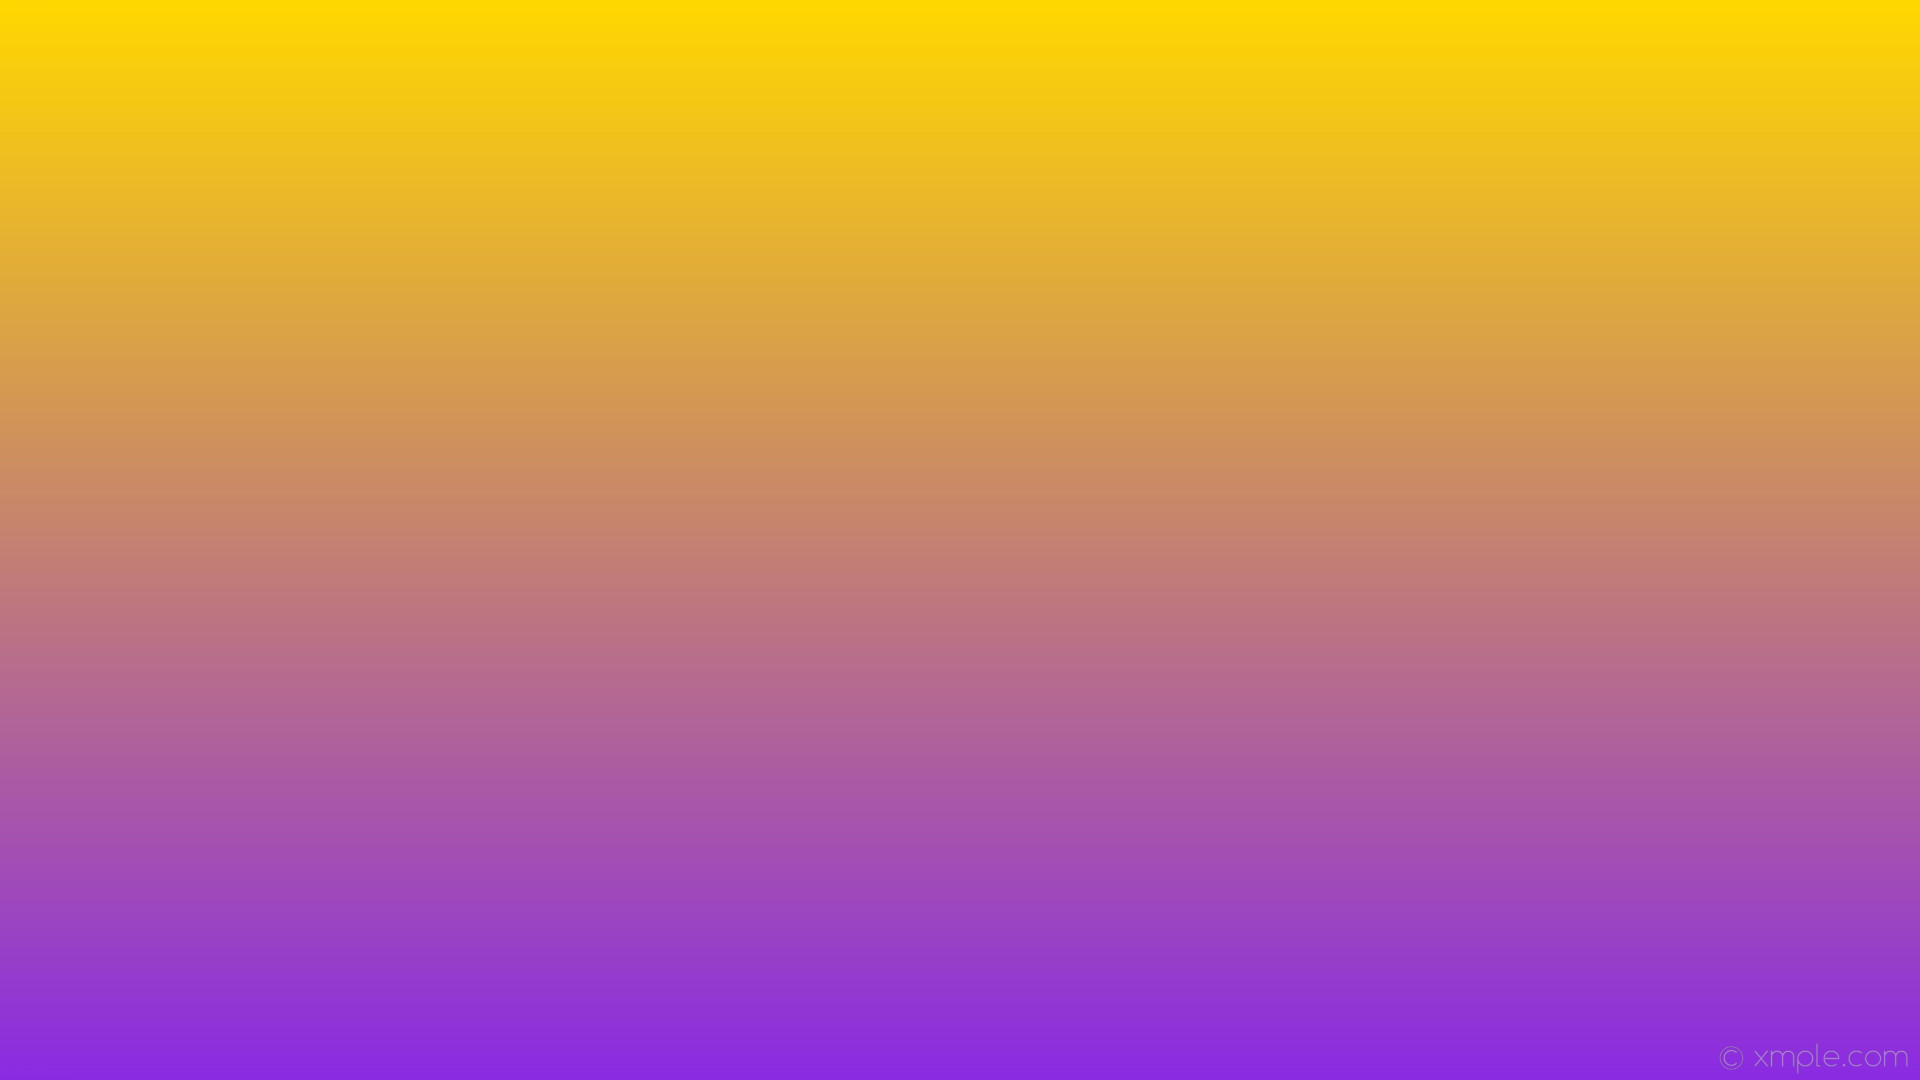 1920x1080 wallpaper yellow gradient linear purple gold blue violet #ffd700 #8a2be2 90Â°